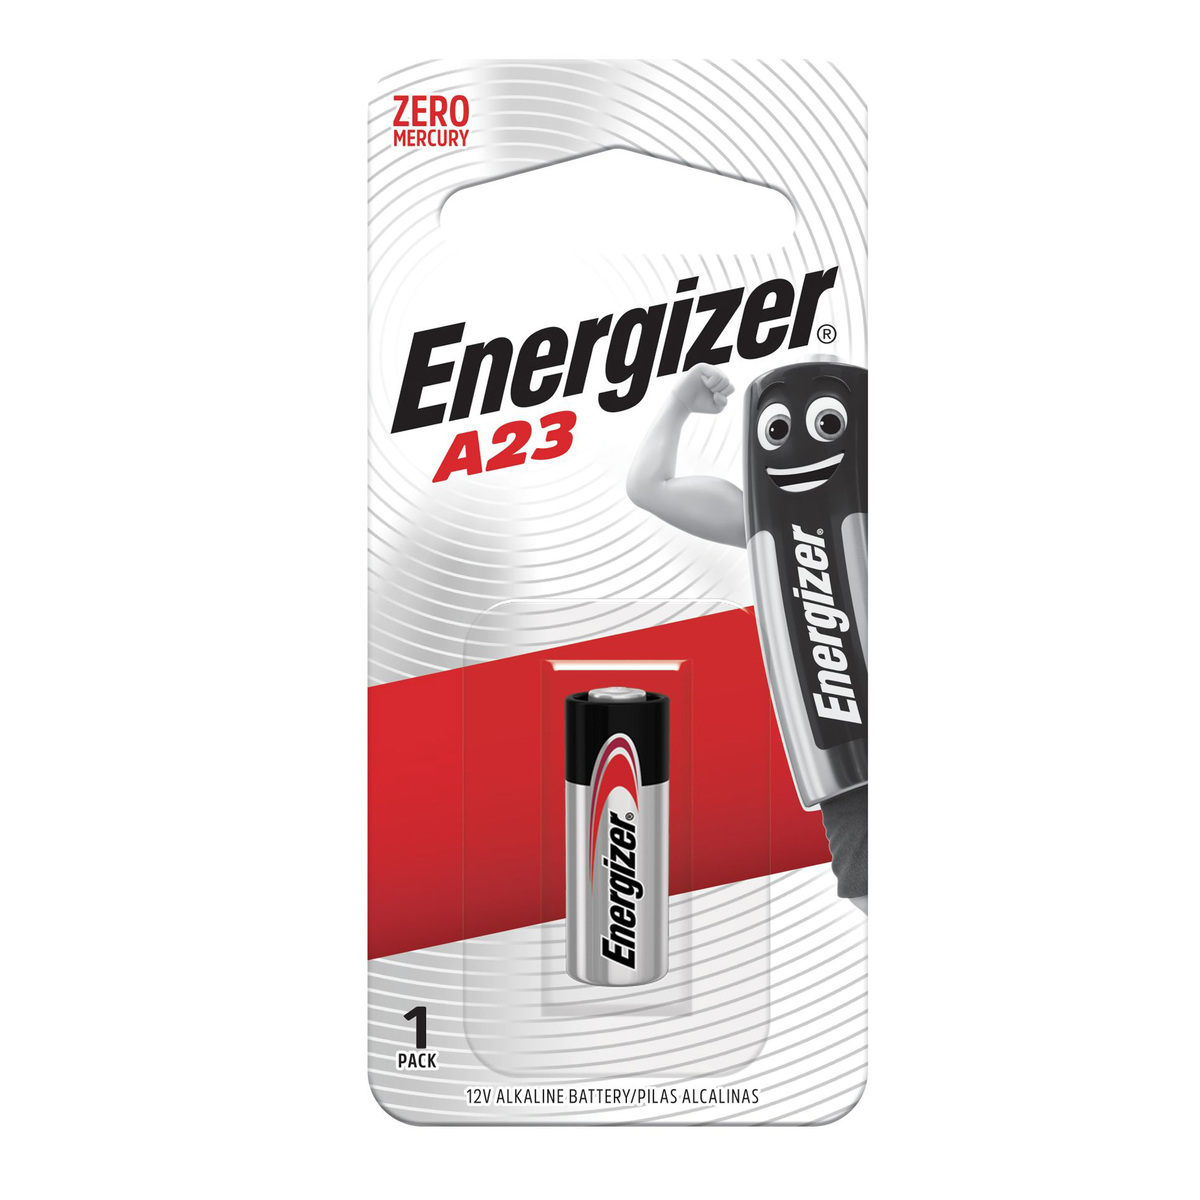 Energizer A23 Alkaline Battery, 12 V, 1 Pcs, A23BP1